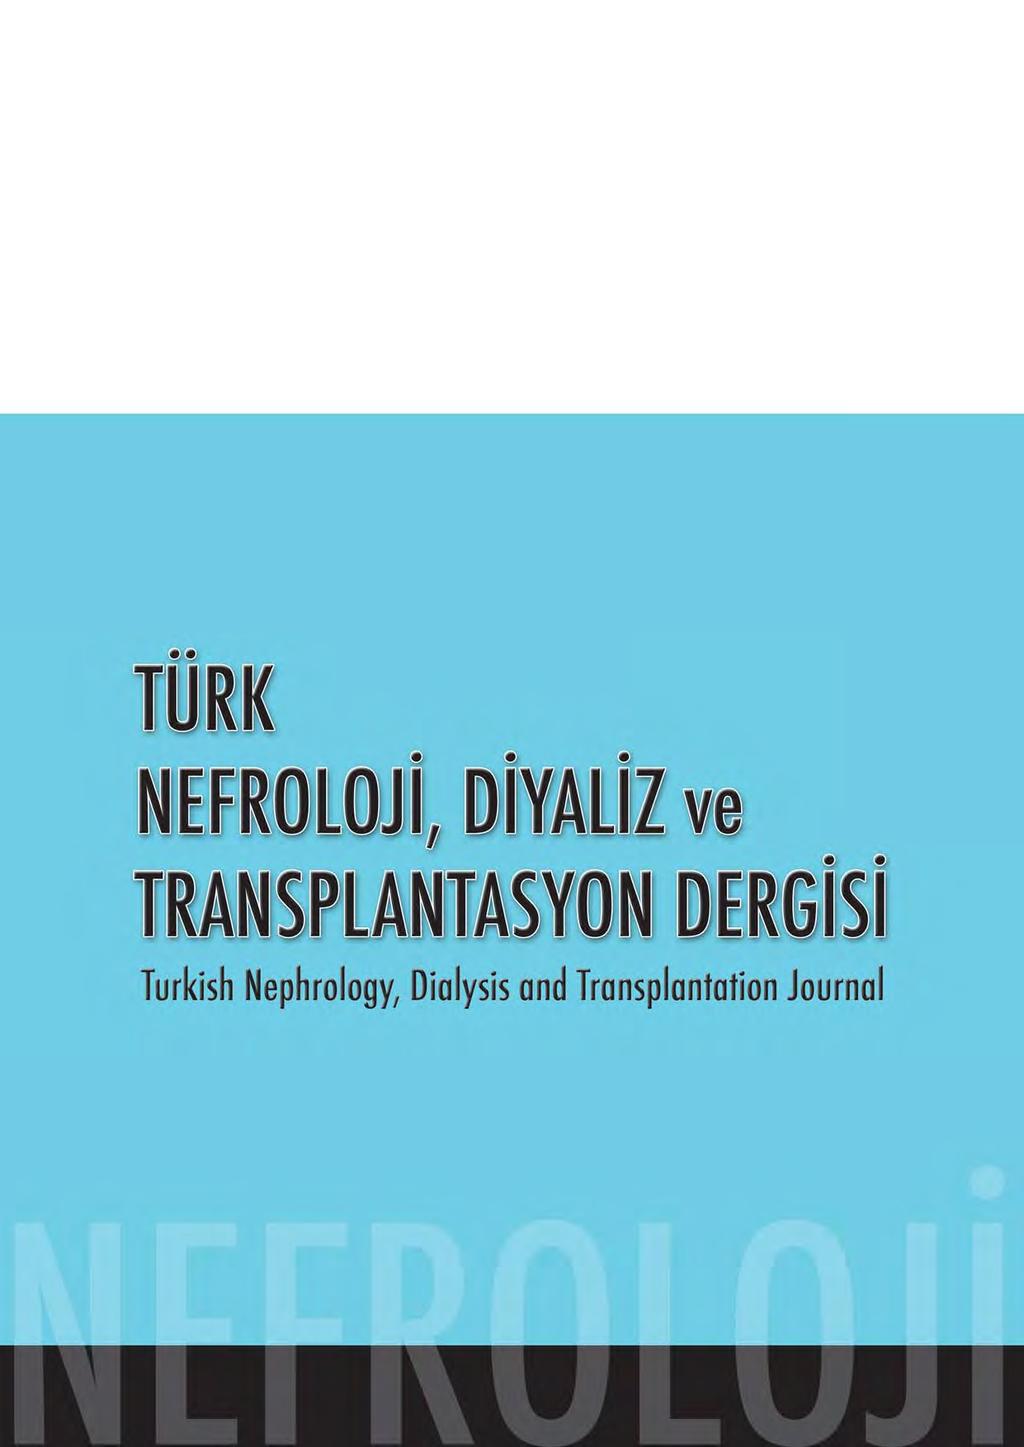 ISSN: 1300-7718 Türk Nefroloji Derne i nin Yay n Organ d r Official Journal of the Turkish Society of Nephrology Cilt / Volume: 18, Ek Say / Supplement Y l / Year: 2009 26.